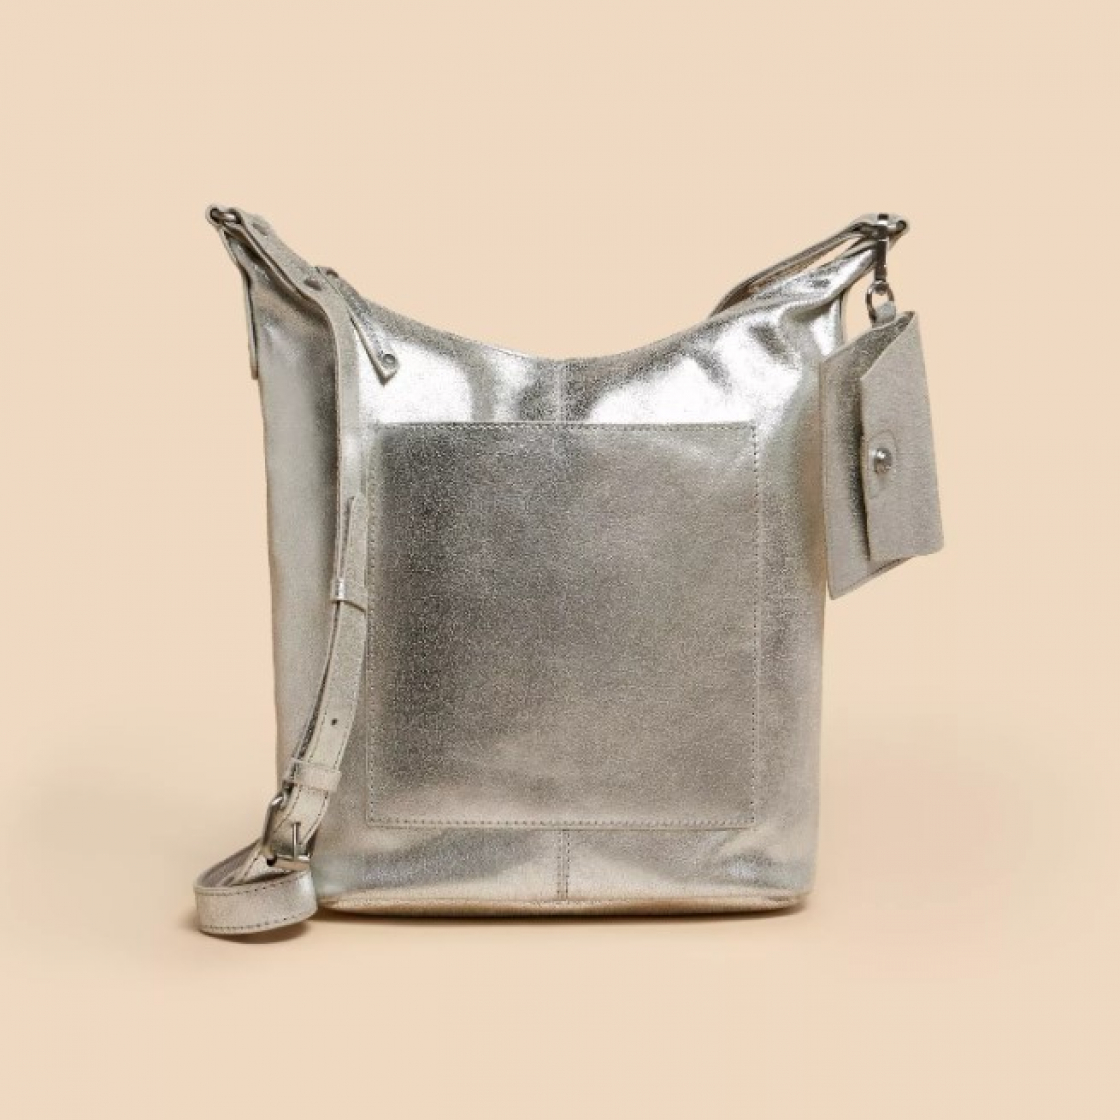 Metallic Handbags Are The Hot Trend This Summer - Attavanti